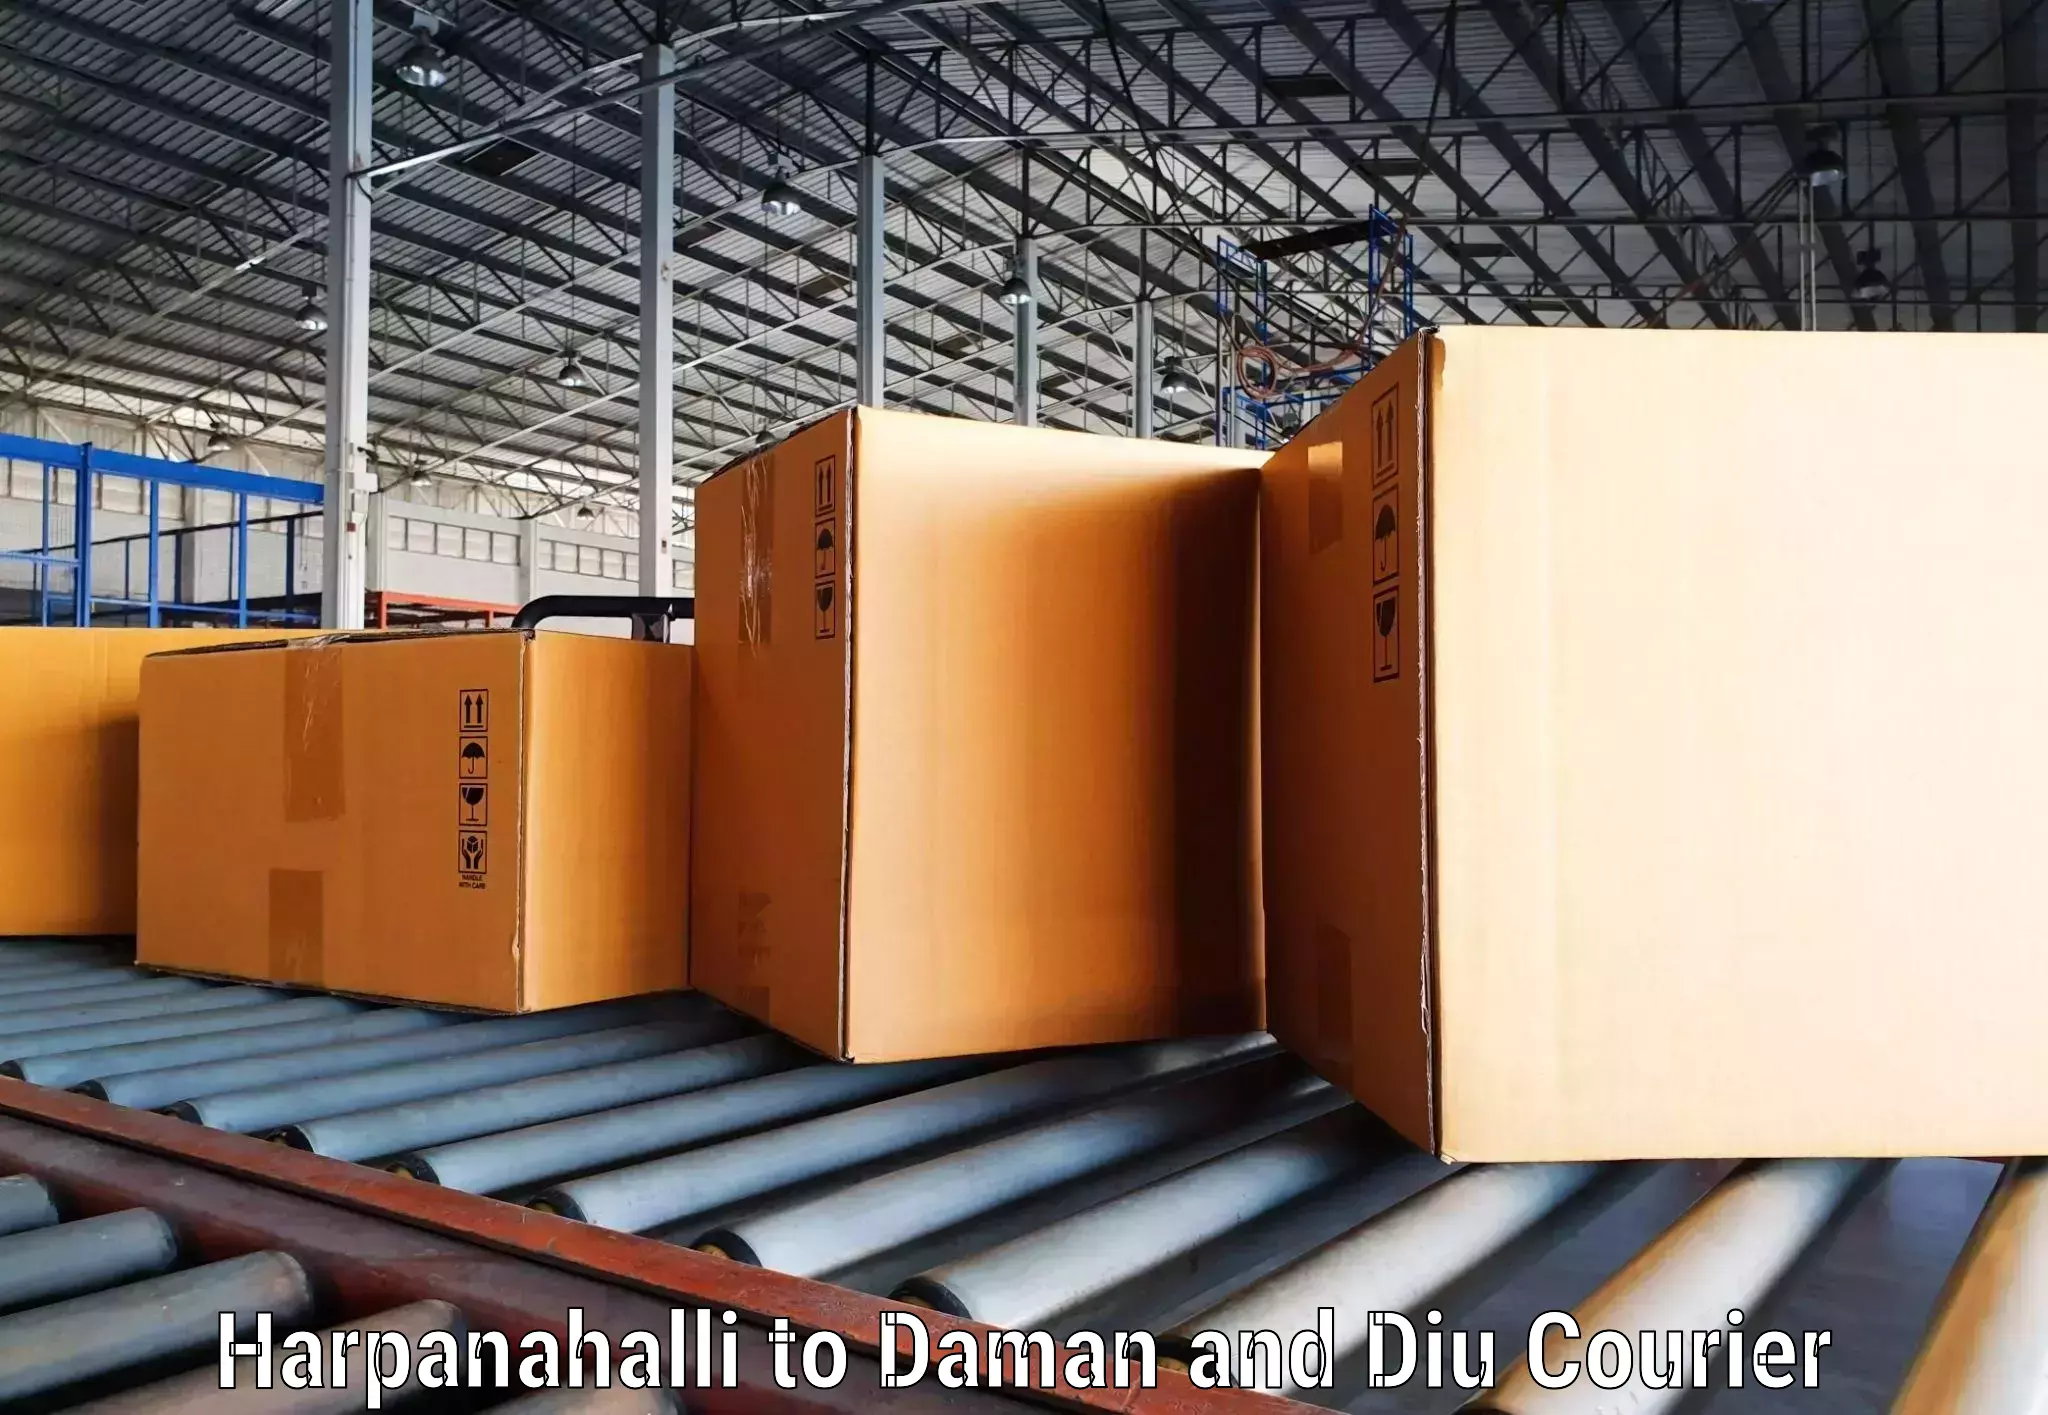 International parcel service Harpanahalli to Diu